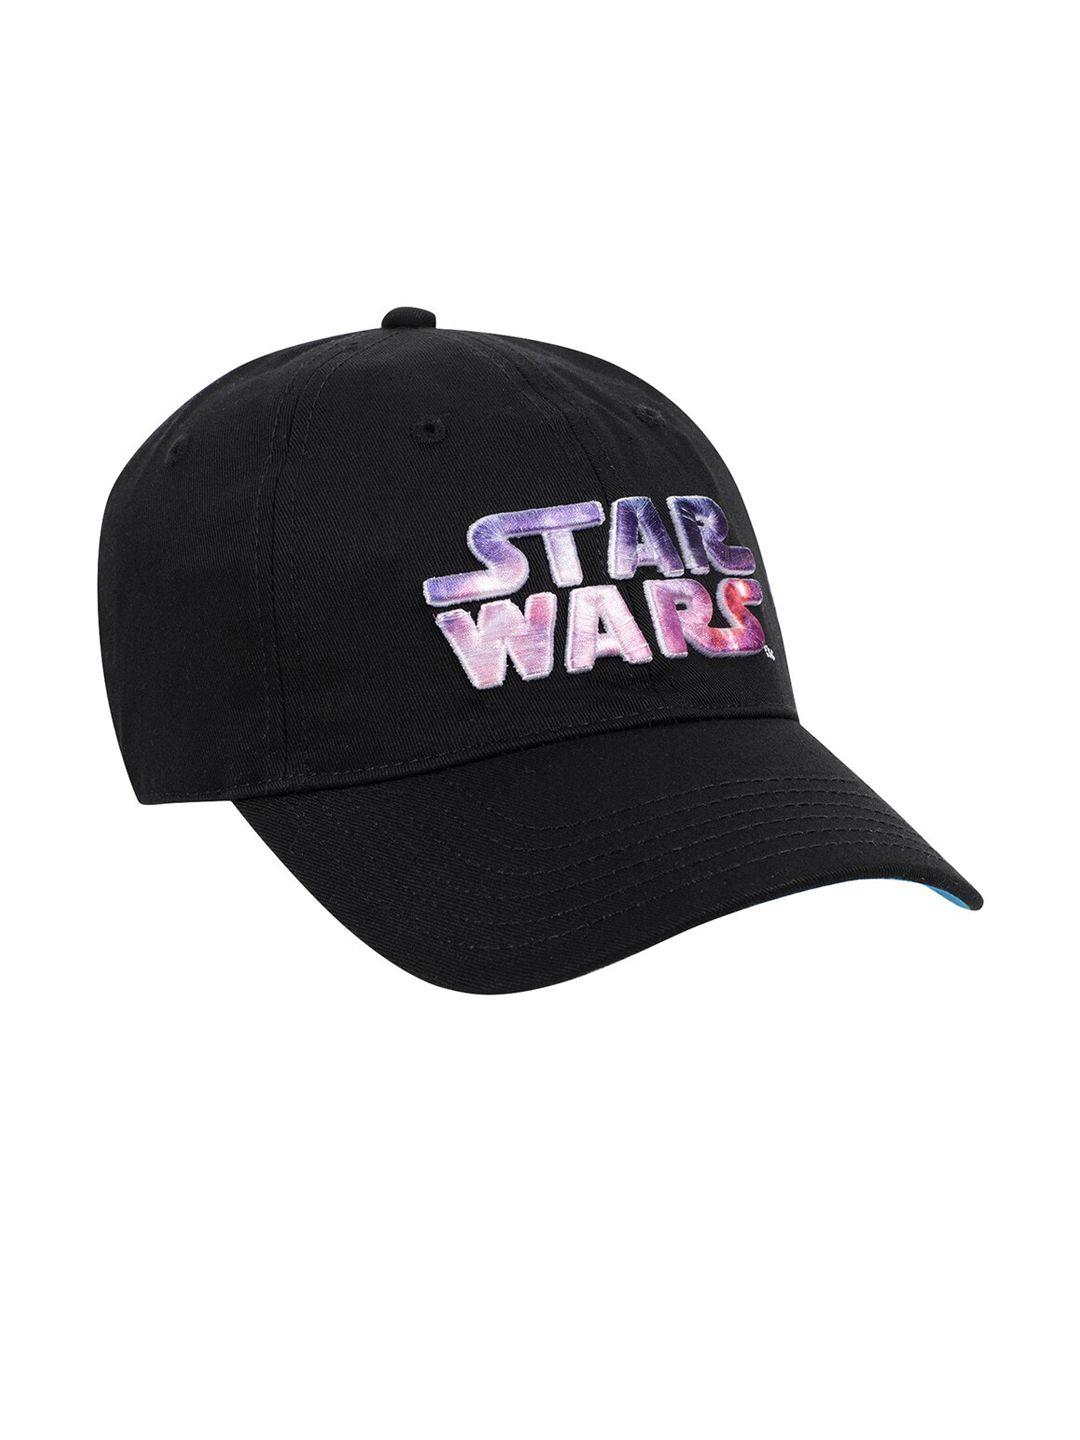 free authority men black & purple star wars embroidered baseball cap